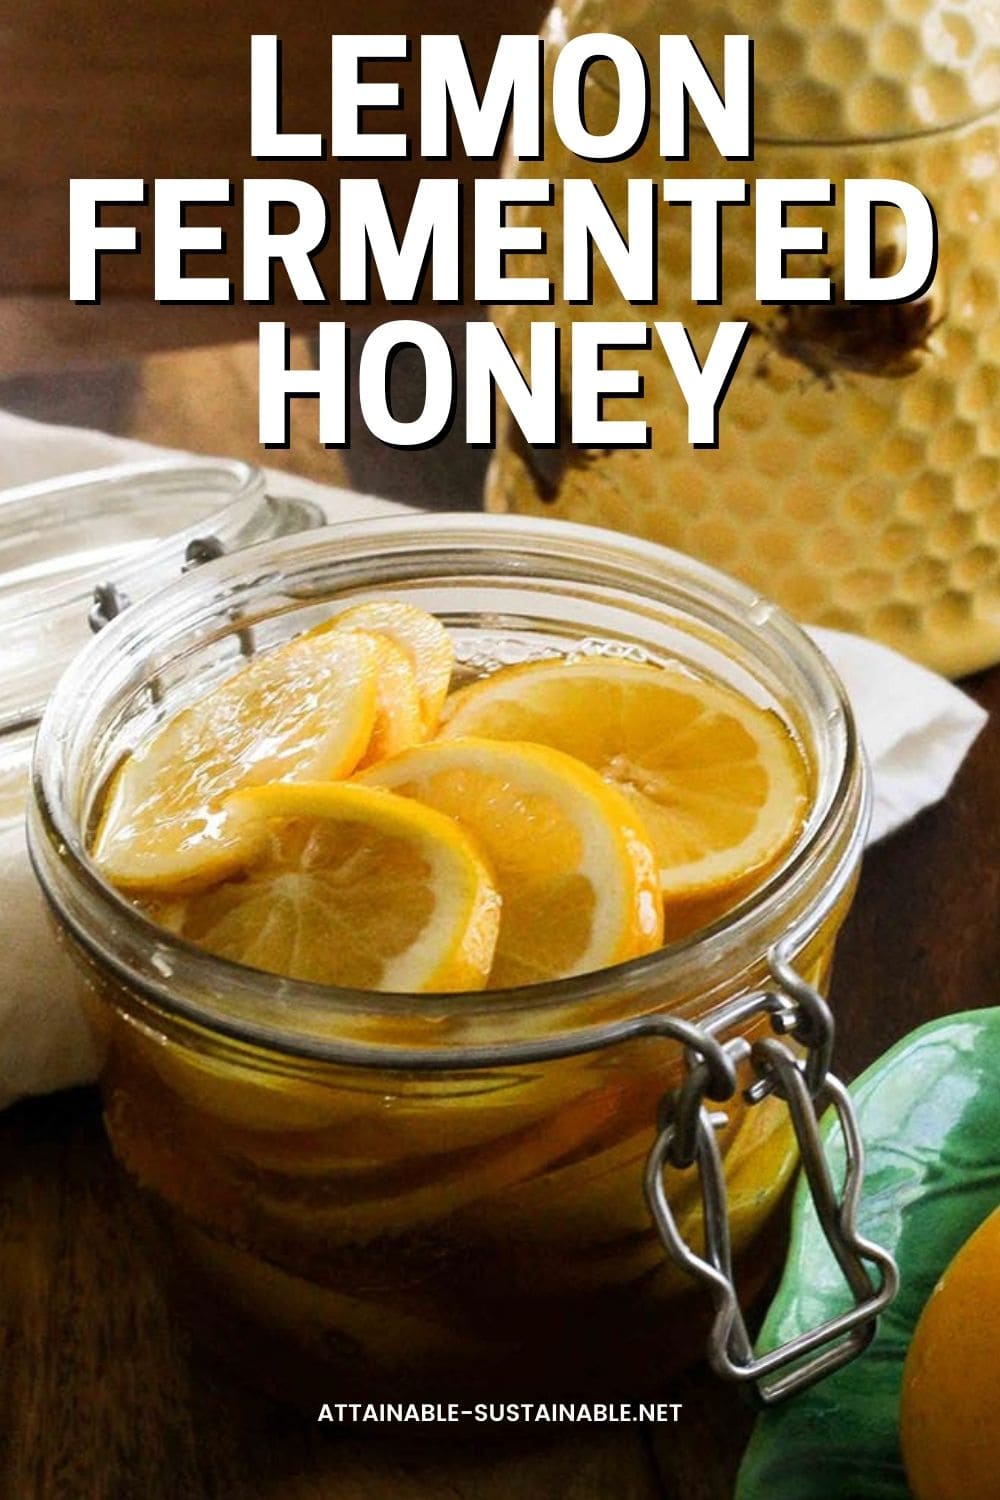 lemon fermented honey (with lemon slices) in a swing top glass jar.